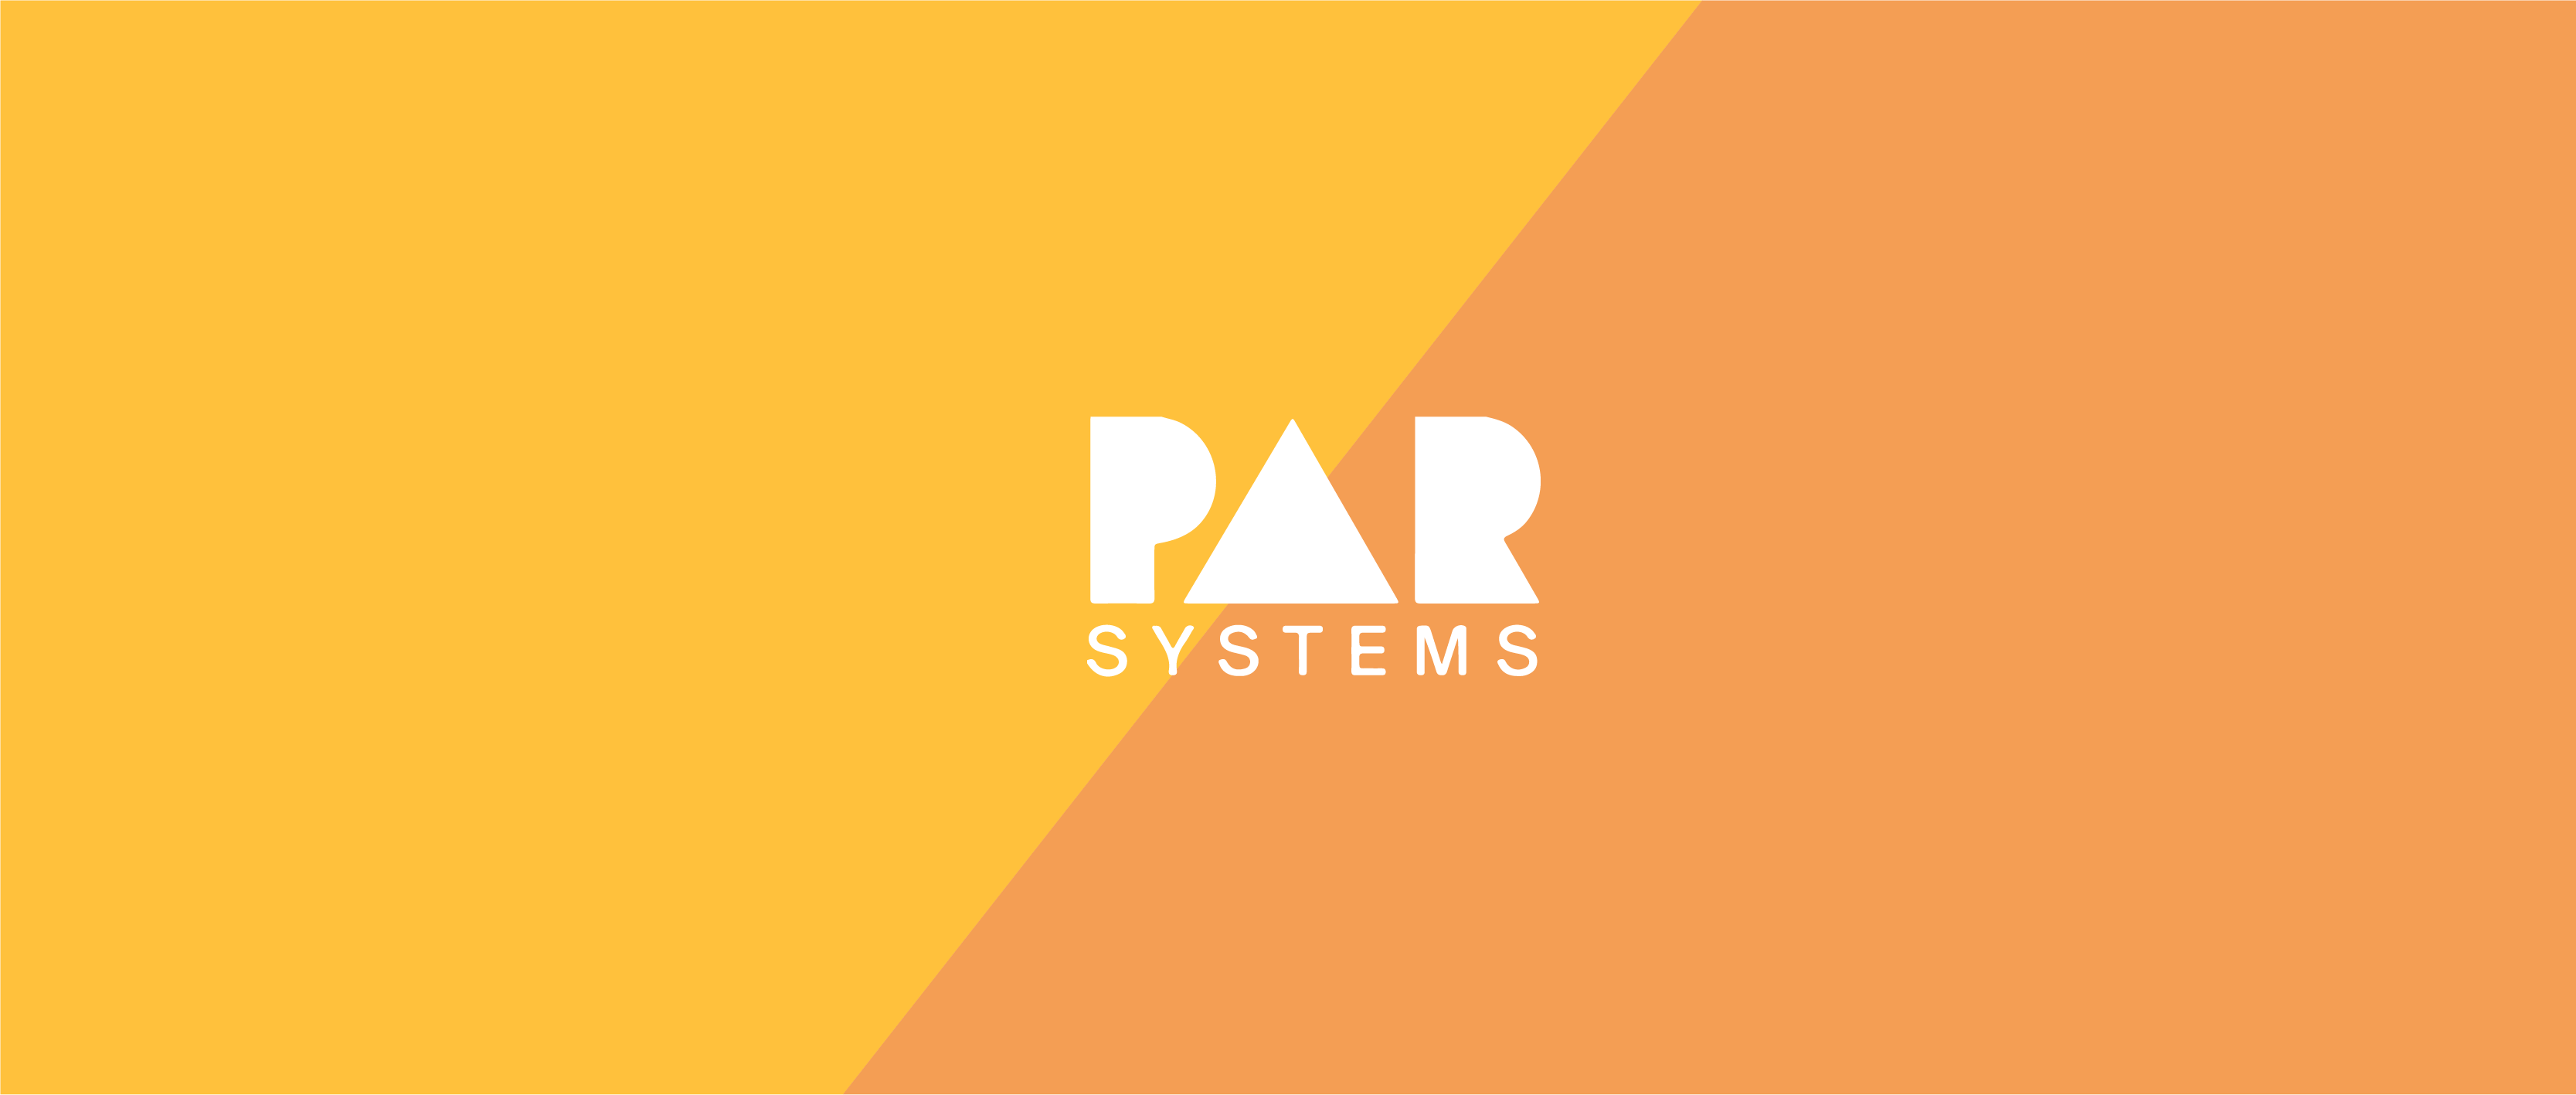 PAR Systems_Case Study_Header-07